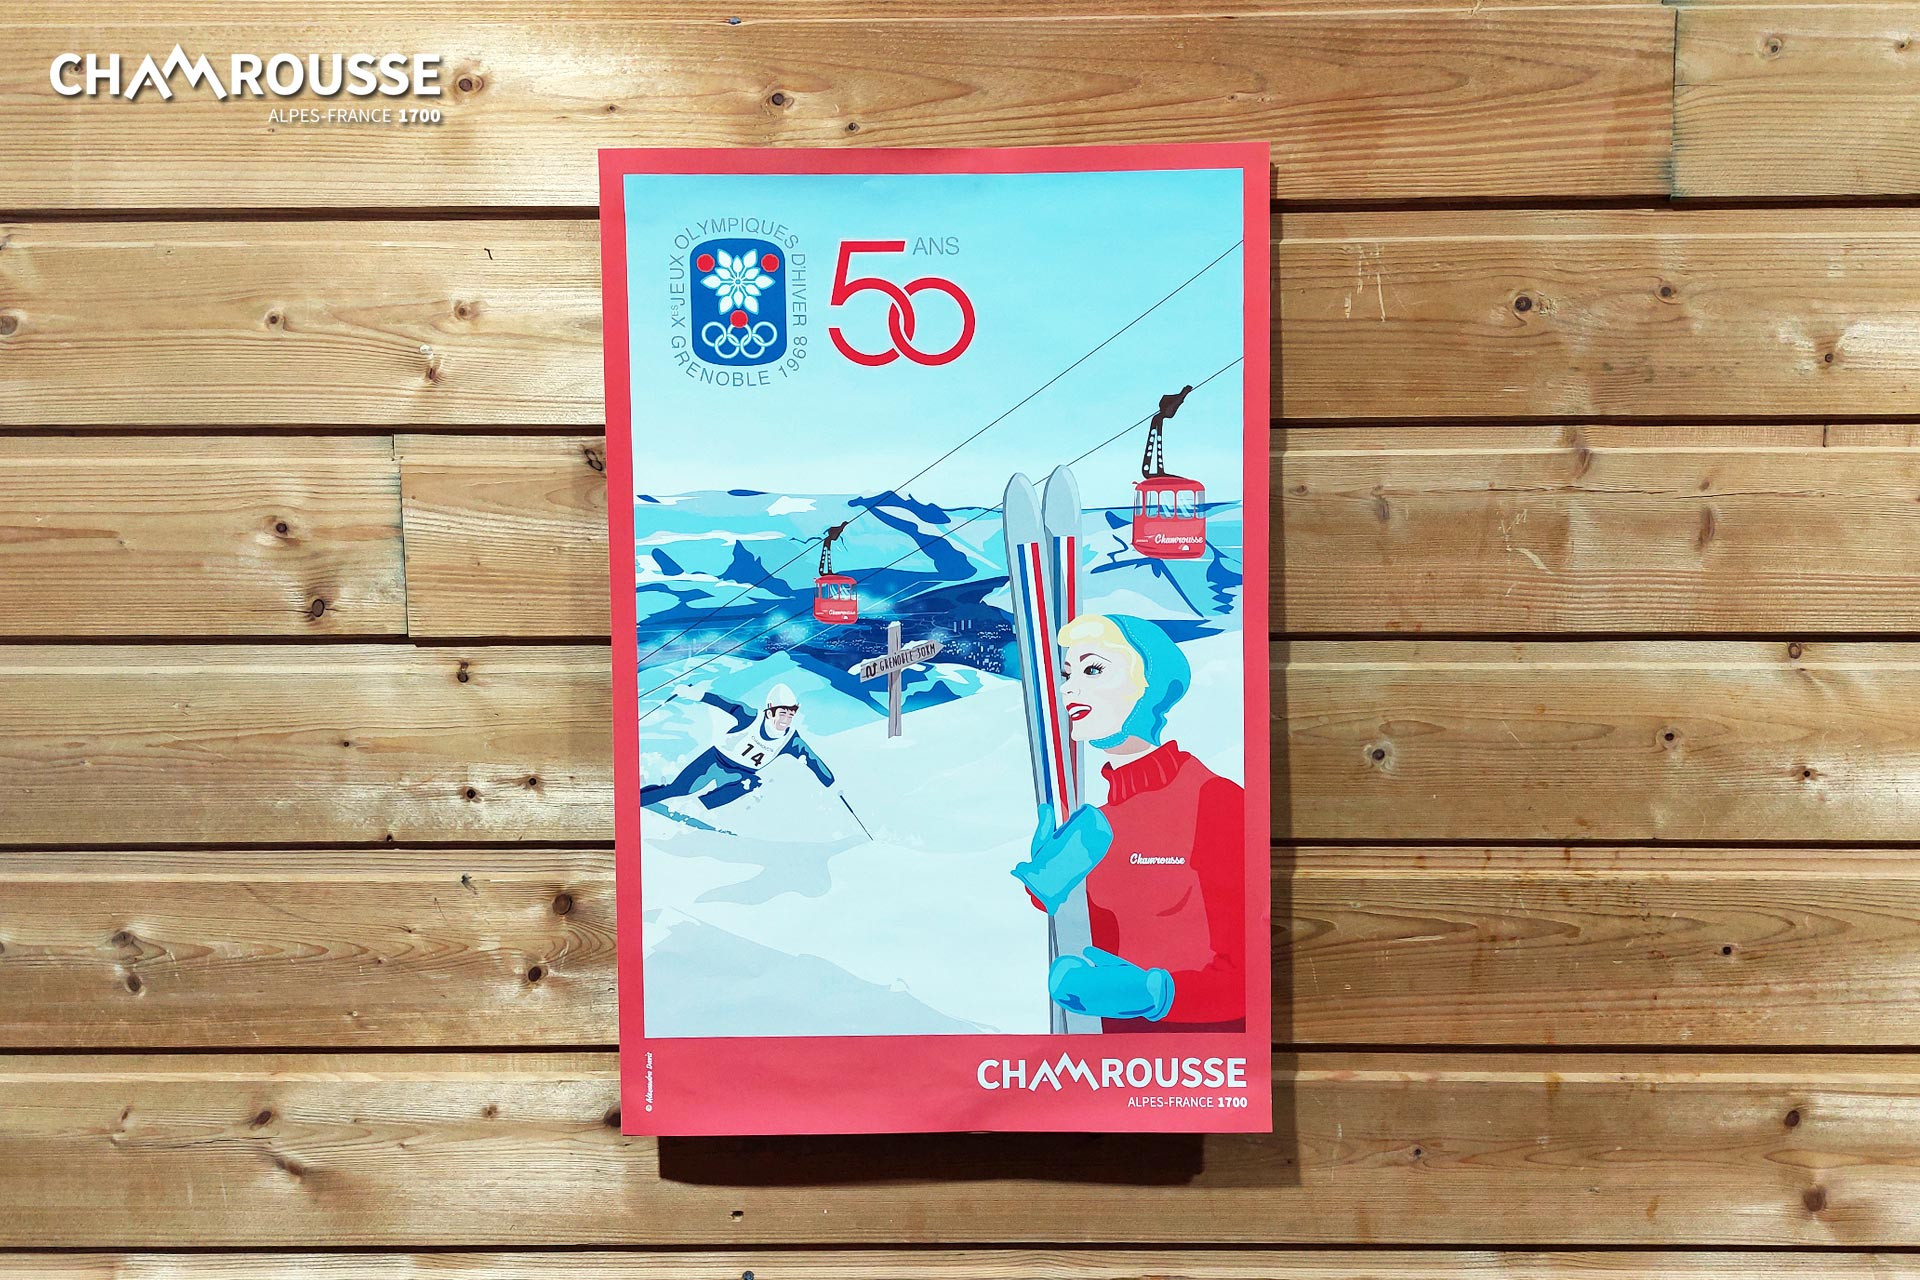 Chamrousse poster anniversary olympic games jo alexandra davis souvenir shop resort ski mountain grenoble isere french alps france